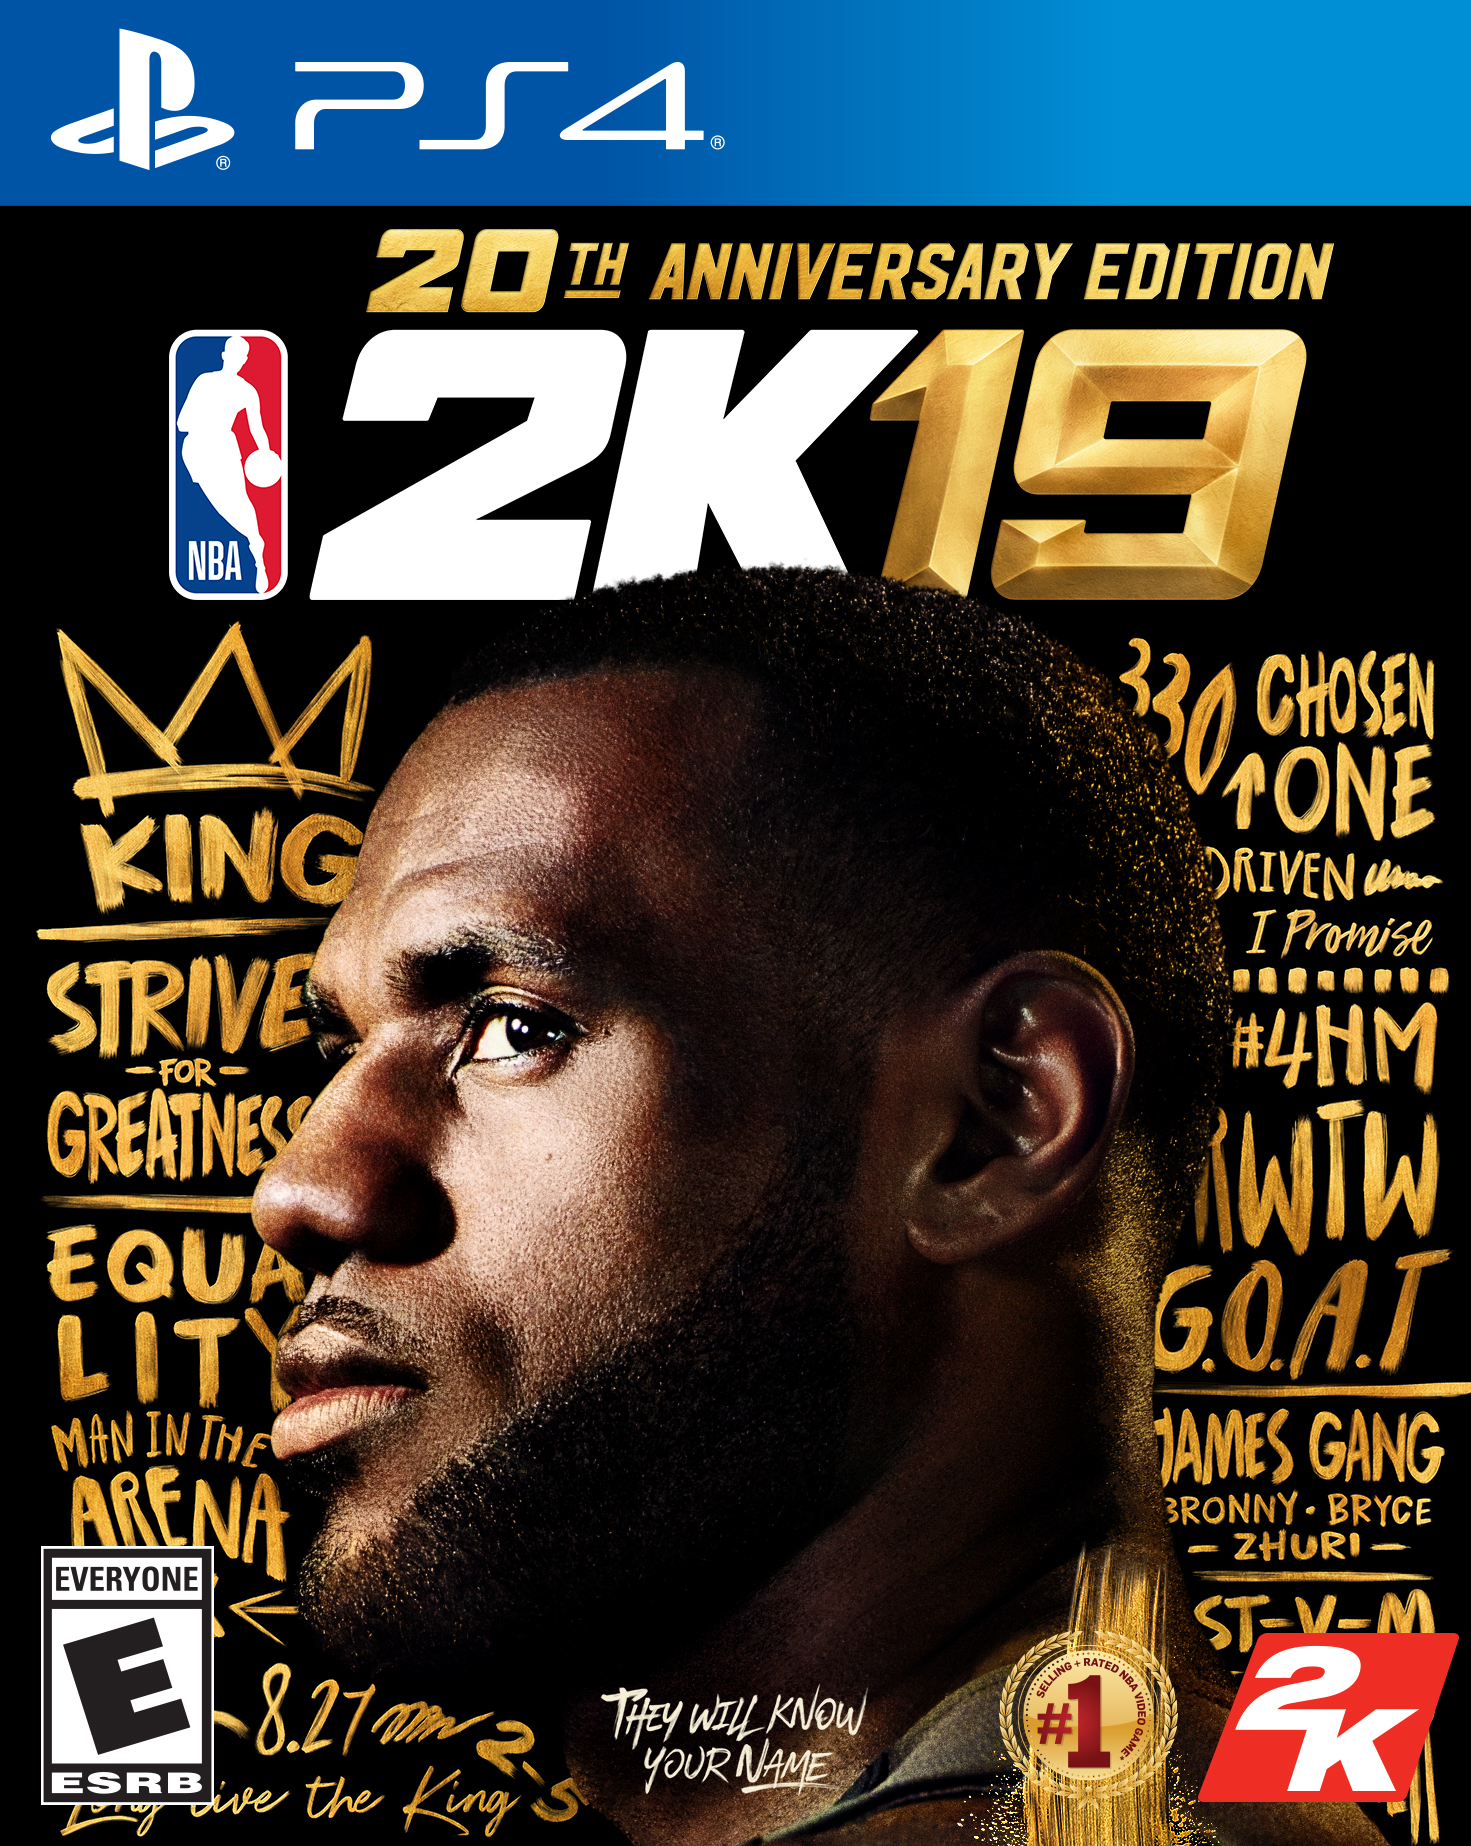 NBA 2K19 20th Anniversary Edition, 2K, PlayStation 4, 710425570612 - image 1 of 6